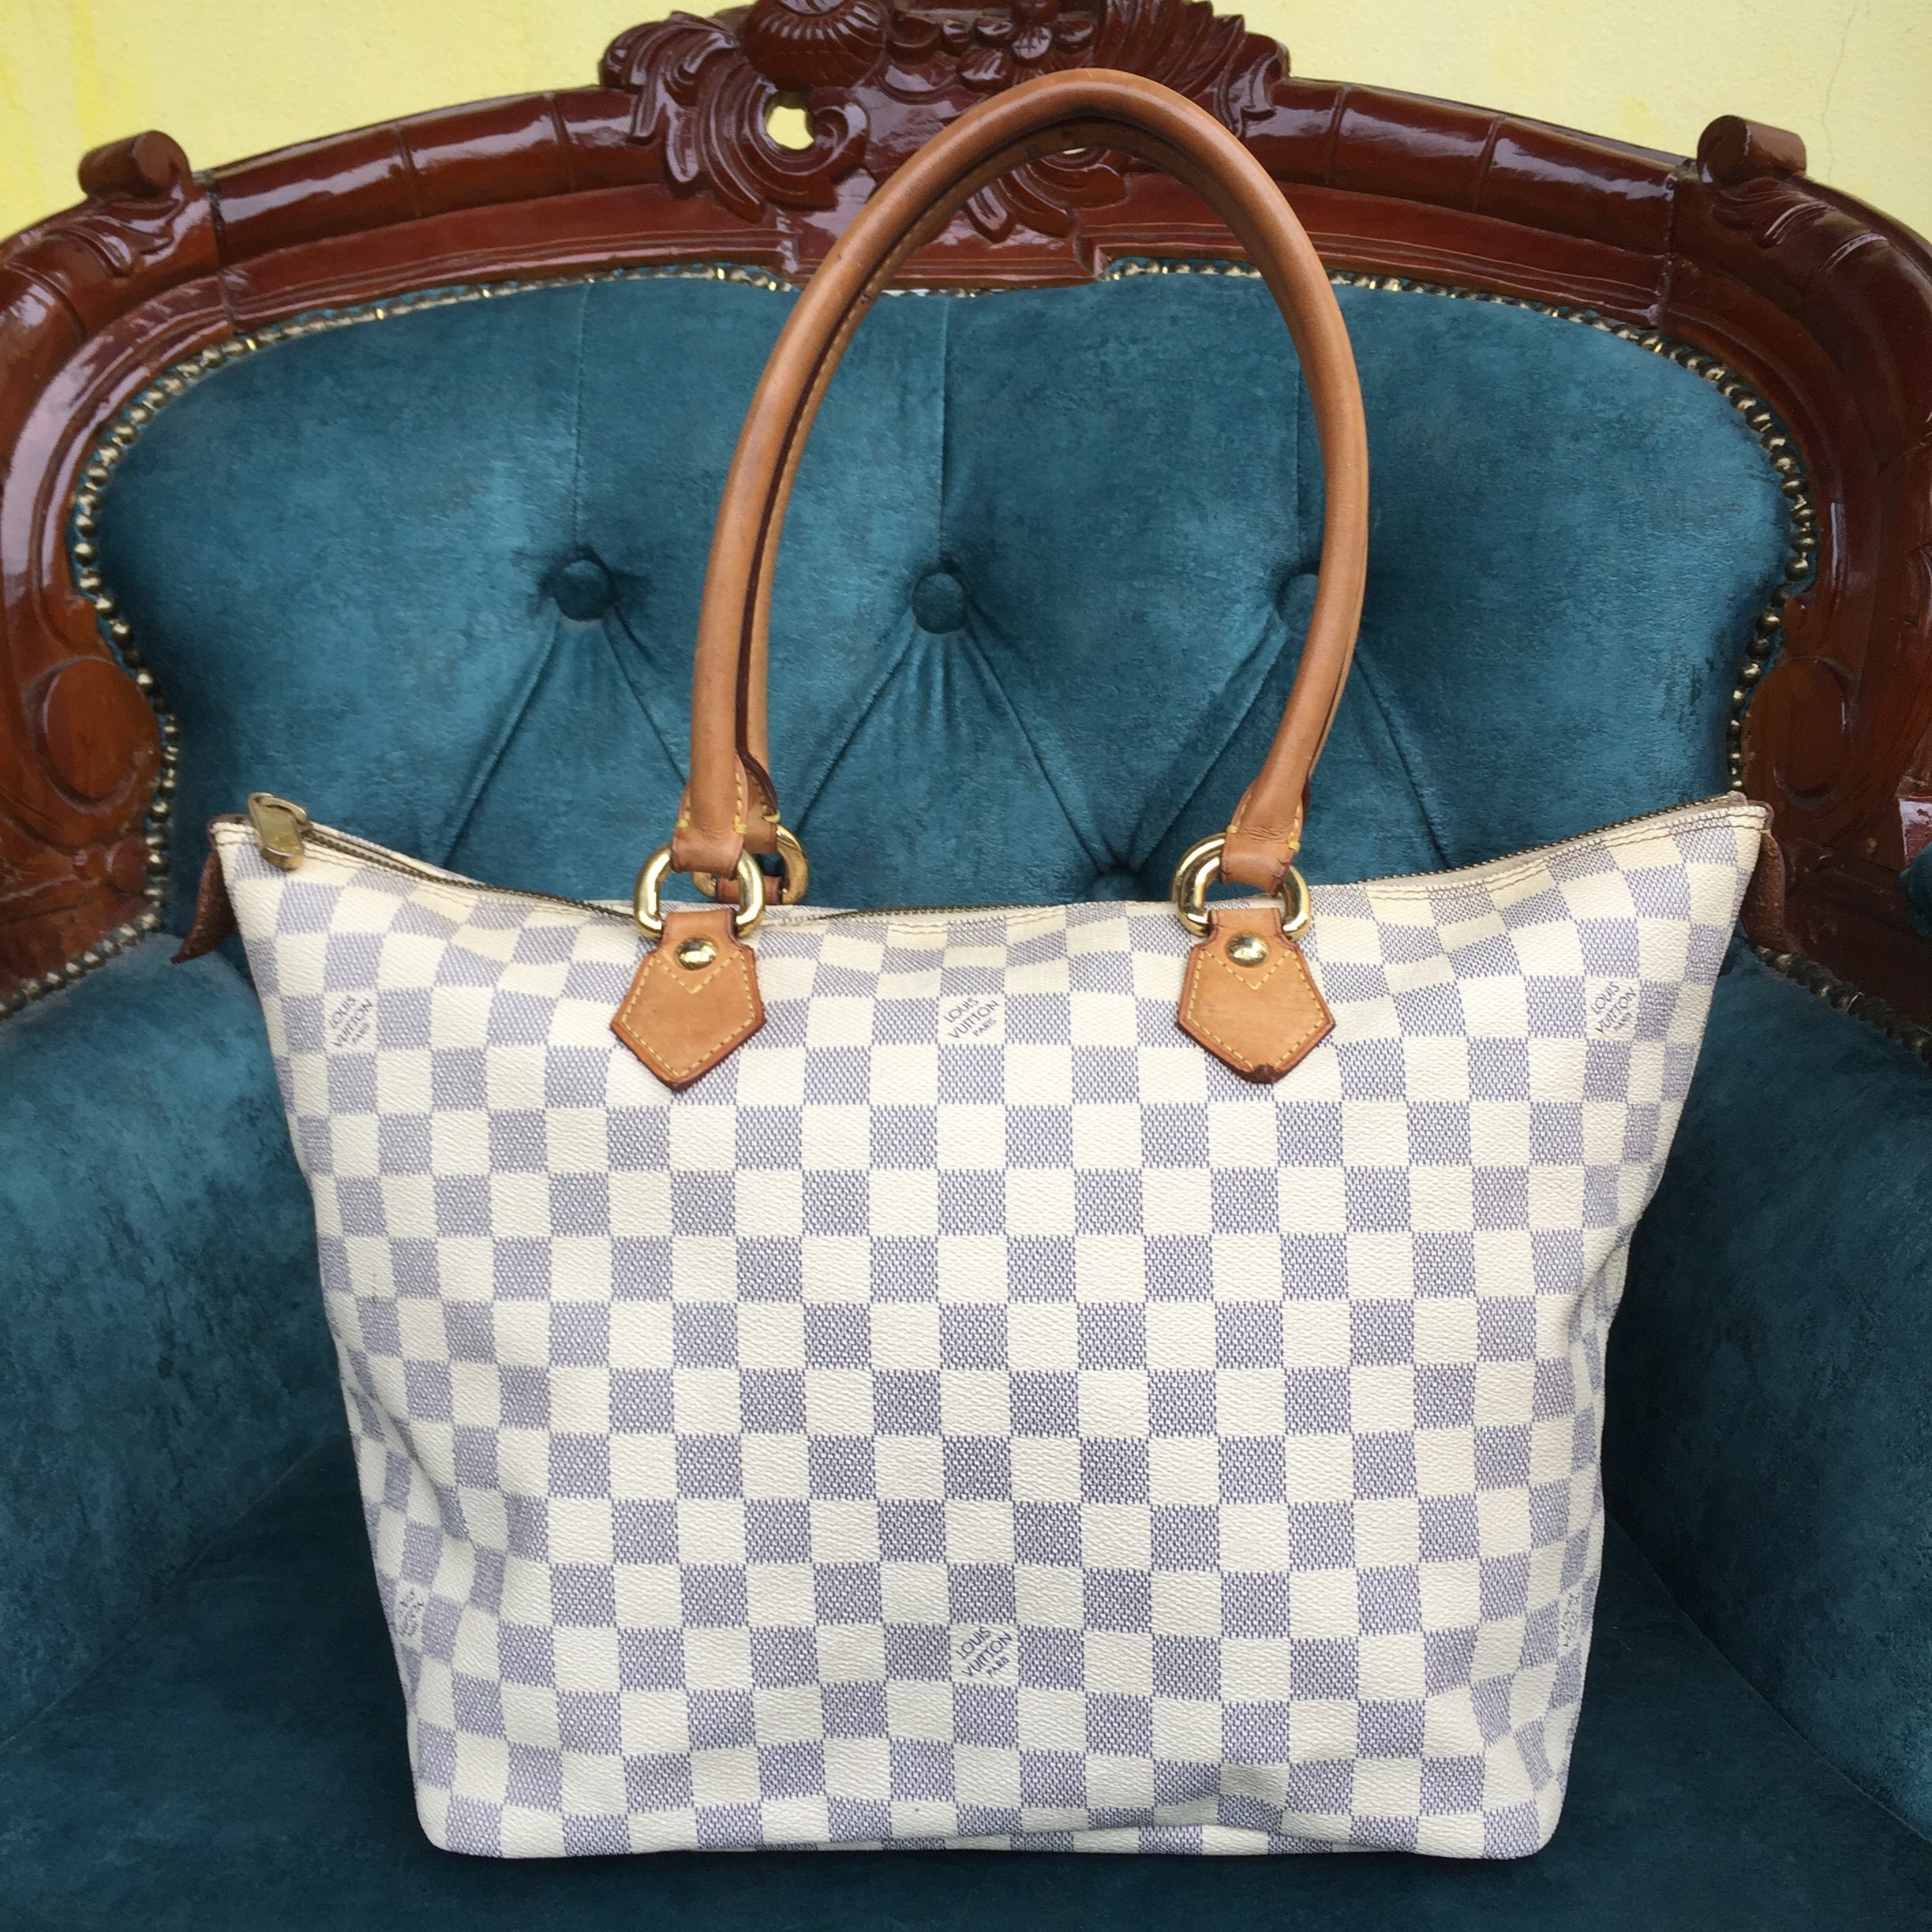 Buy Louis Vuitton Handbag Damier Online In India -  India